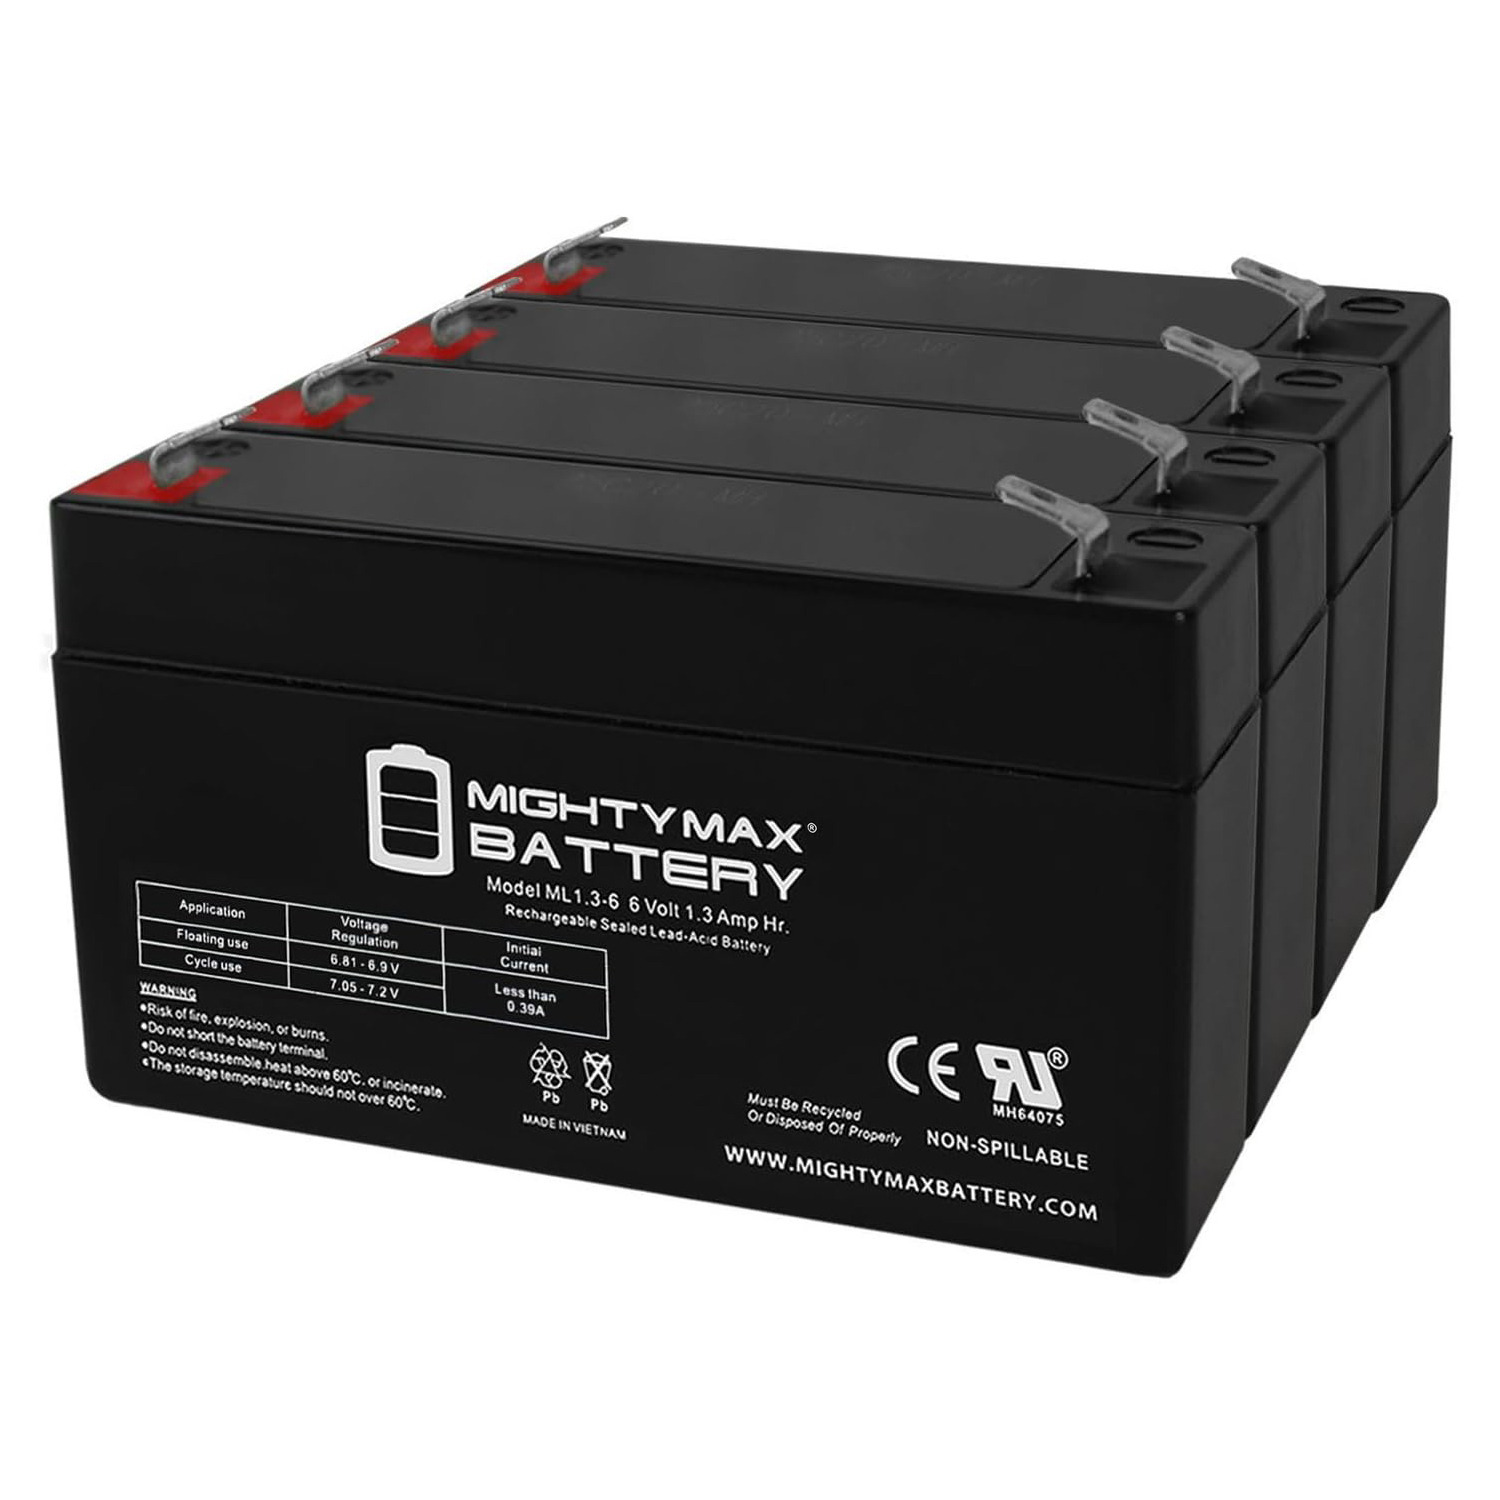 6V 1.3Ah Newport Medical Instruments E100 Ventilator Medical Battery - 4 Pack